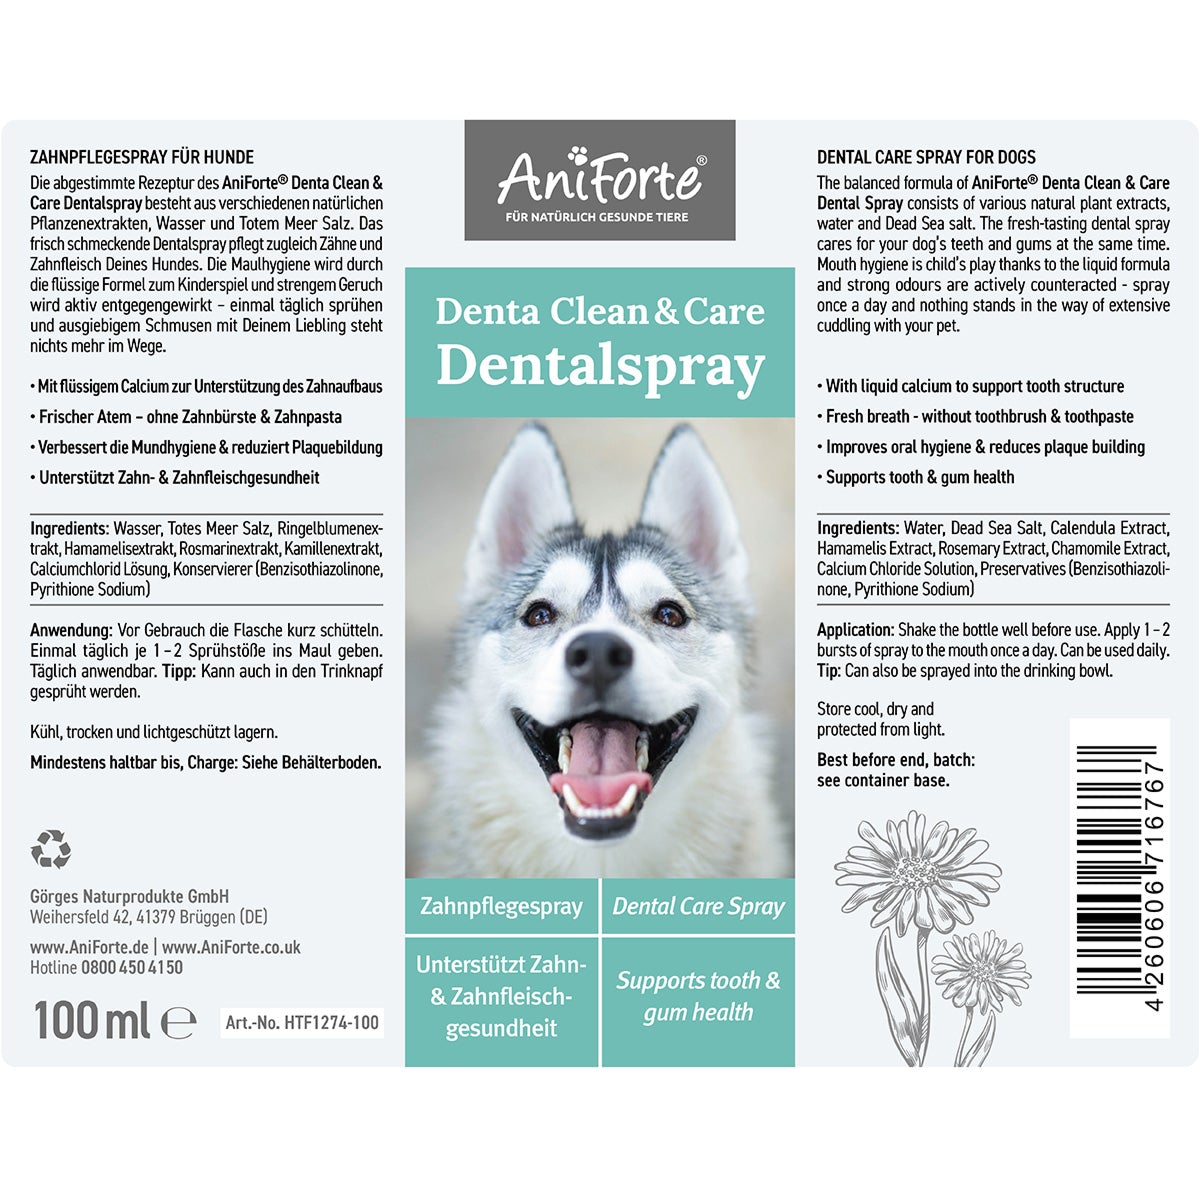 Denta Clean & Care Dentalspray - AniForte